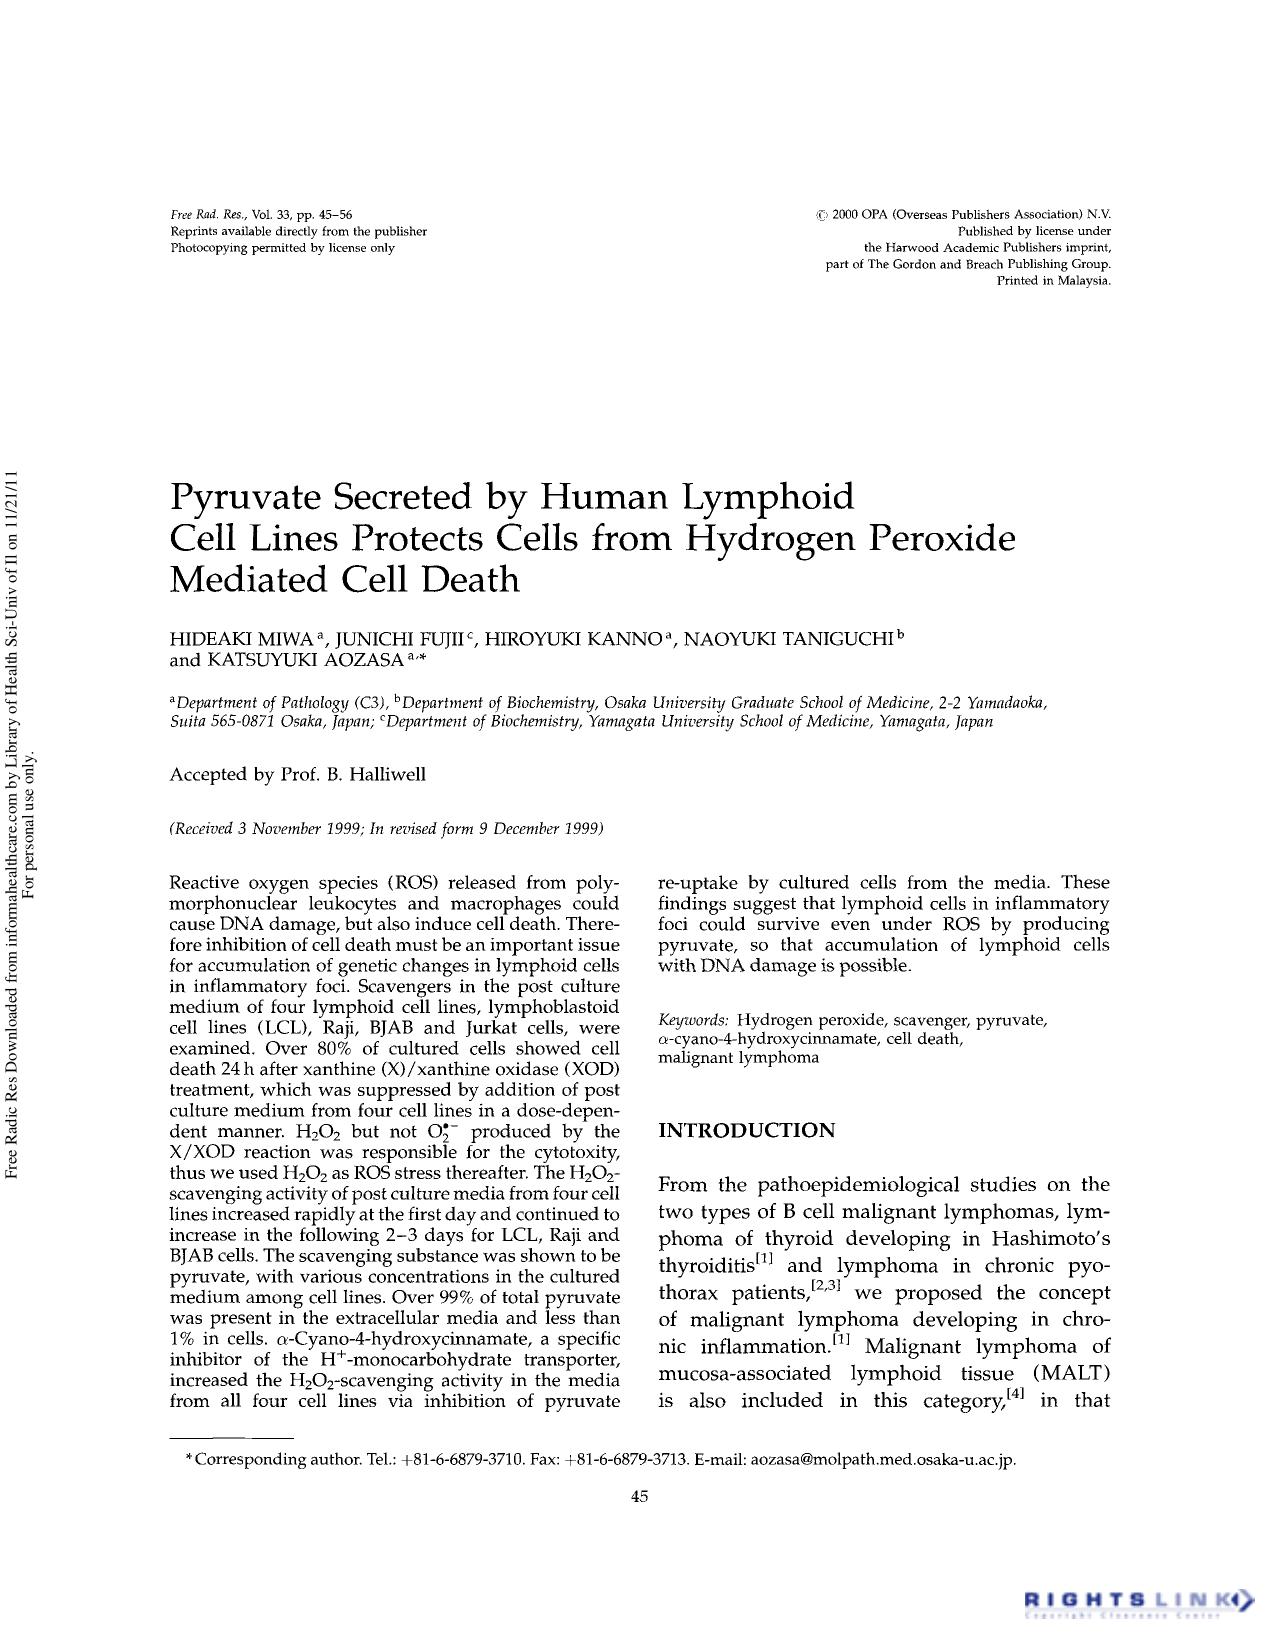 Pyruvate secreted by human lymphoid cell lines protects cells from hydrogen peroxide mediated cell death by Hideaki Miwa Junichi Fujii Hiroyuki Kanno Naoyuki Taniguchi & Katsuyuki Aozasa